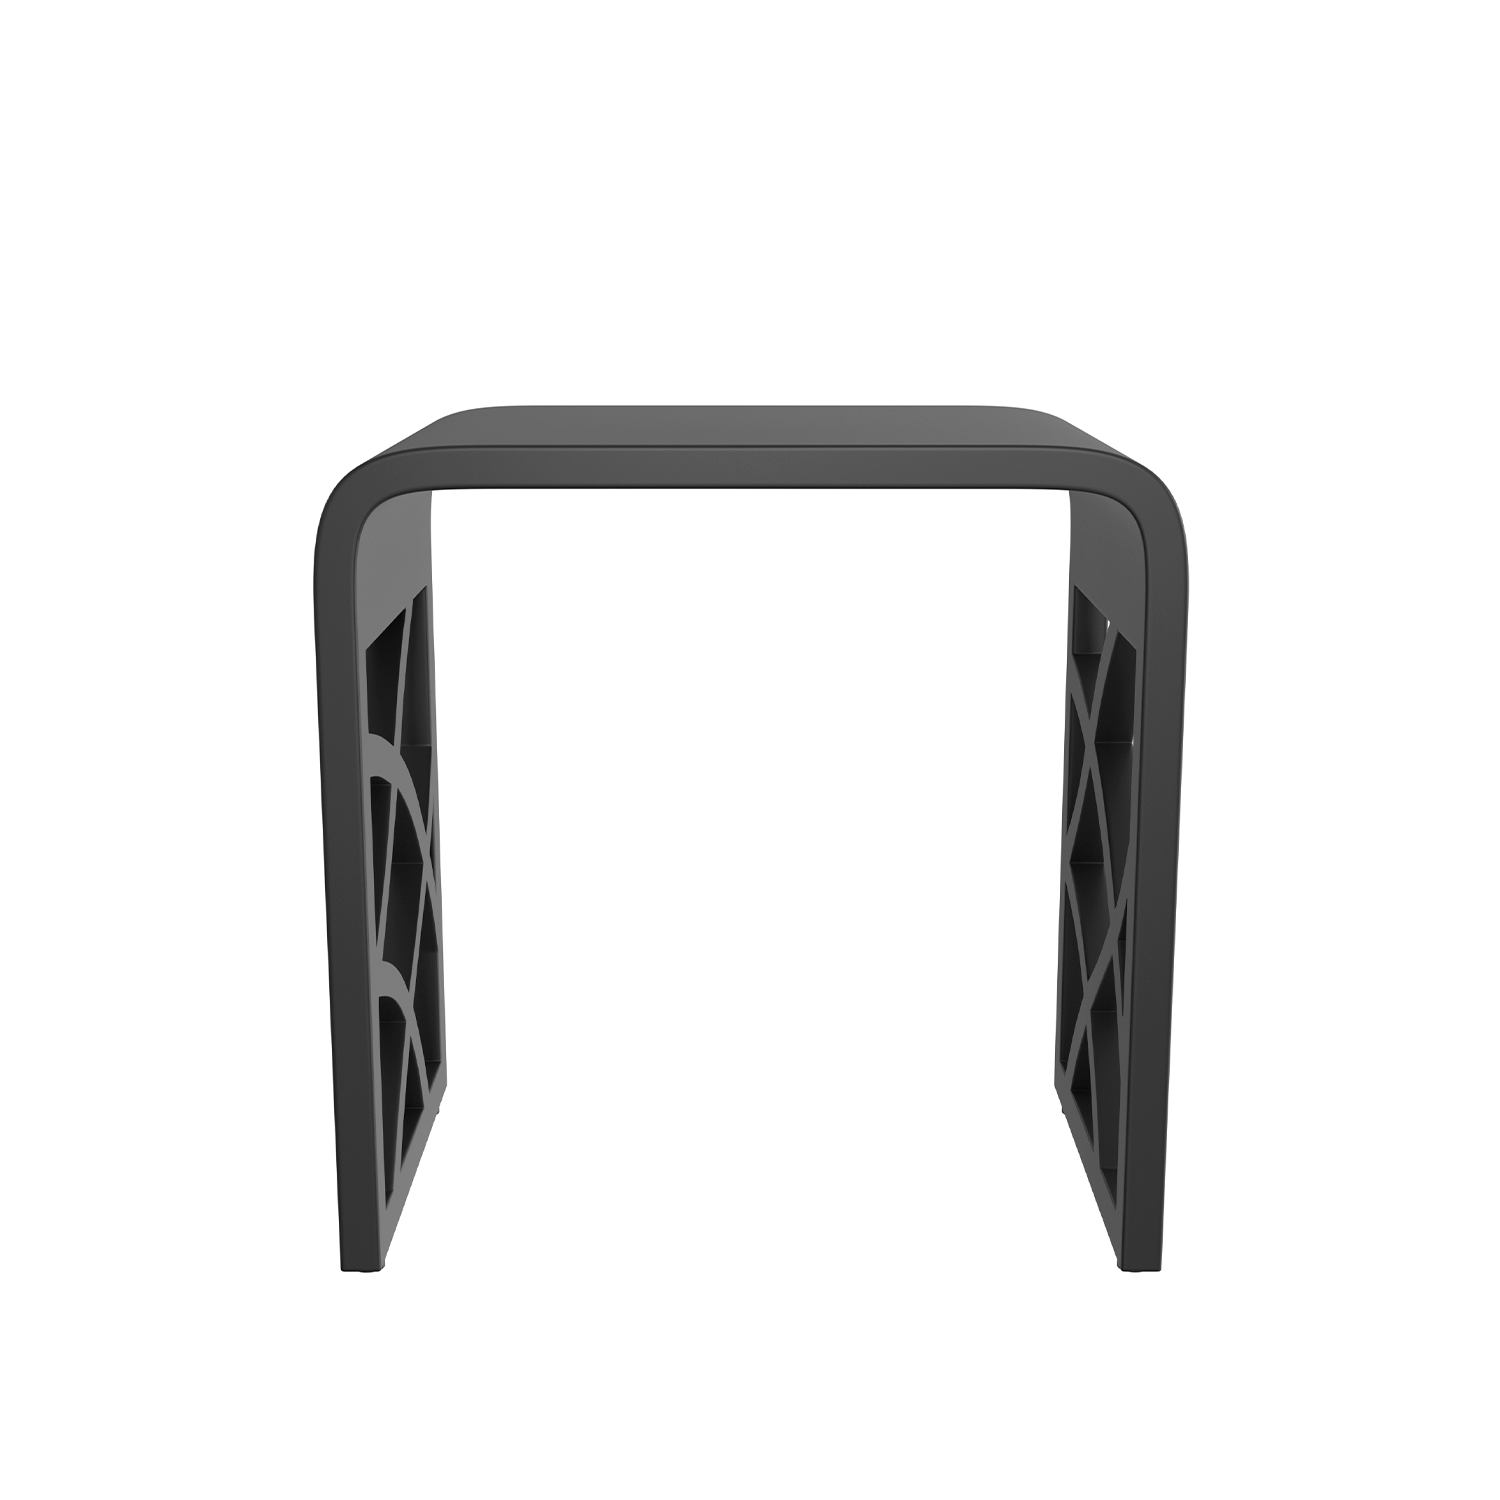 DAX Solid Surface Bathroom Stool - Matte Black (DAX-ST-05-B)